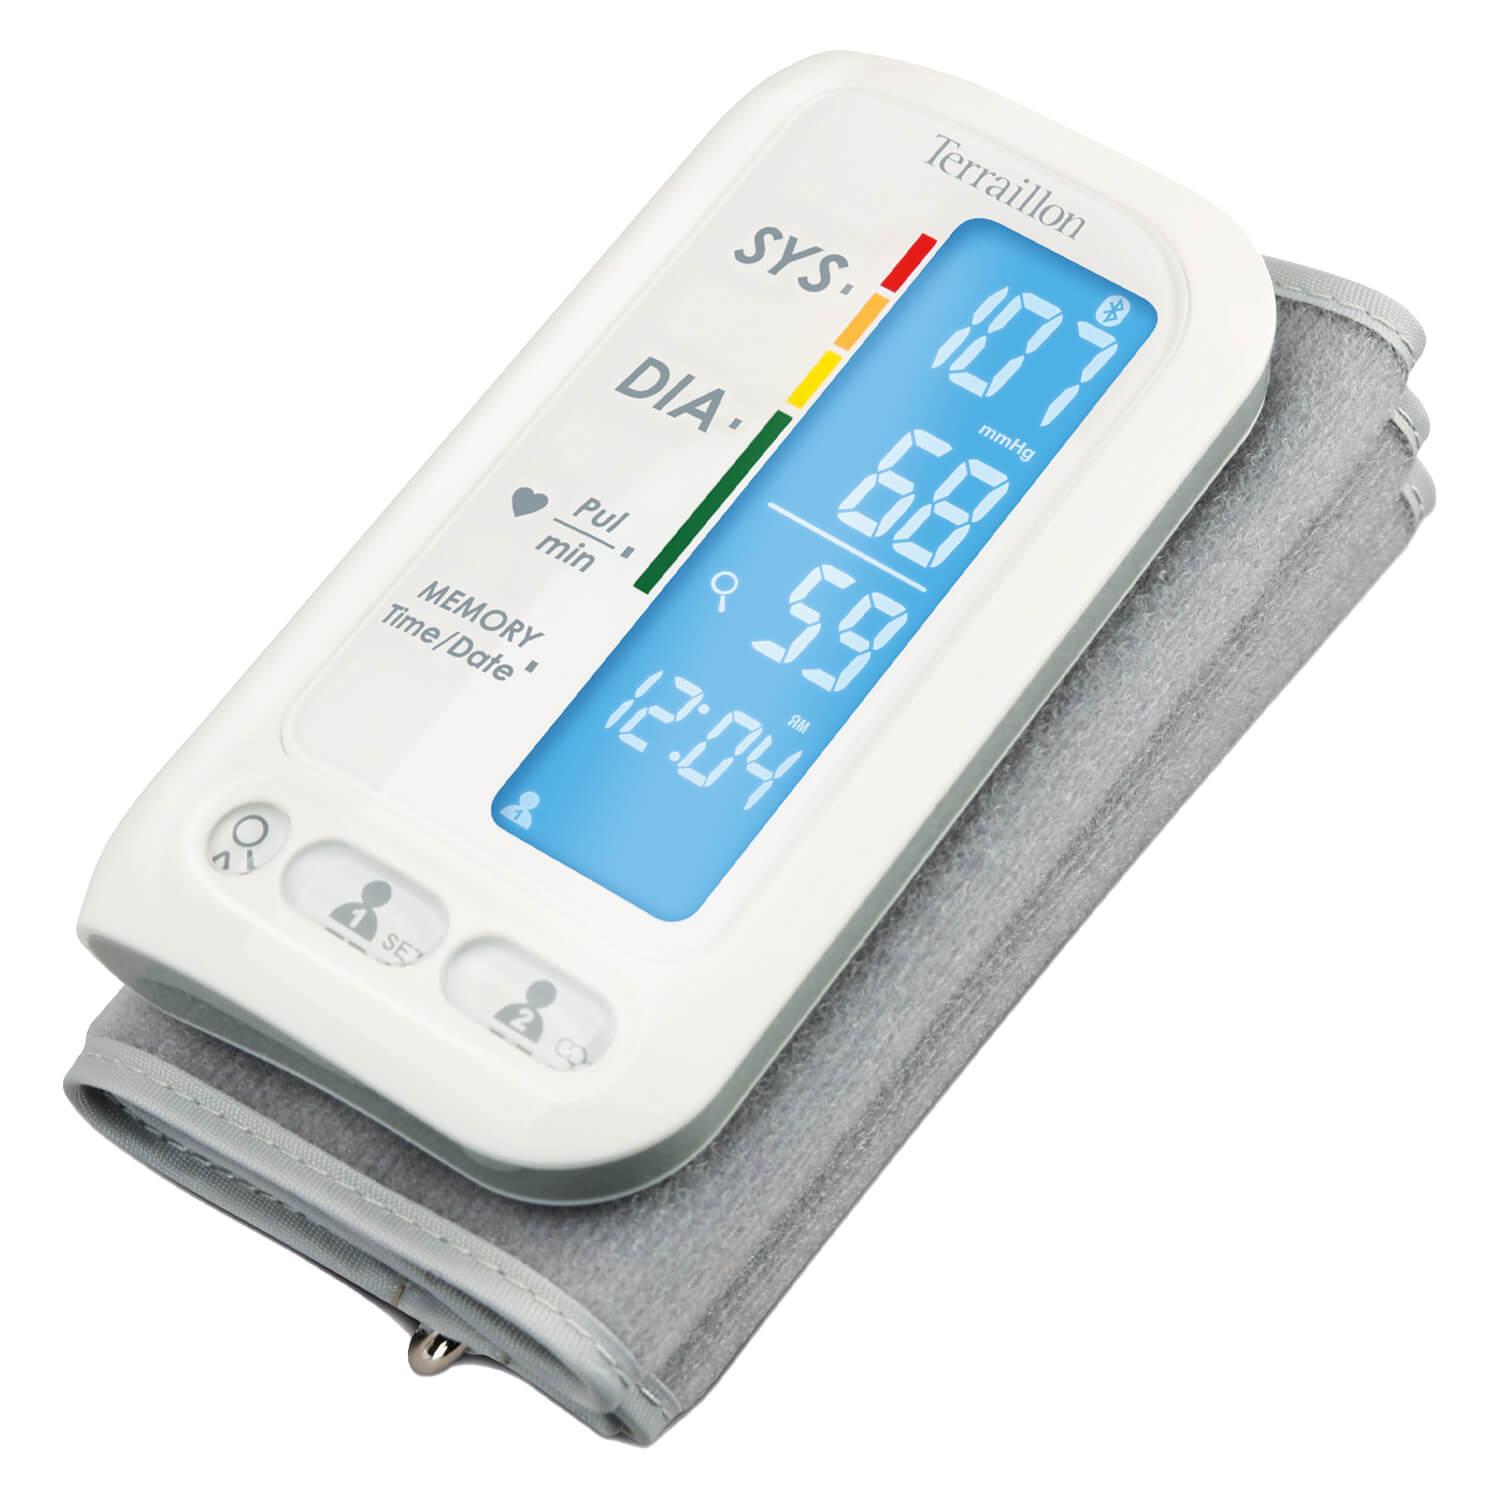 Terraillon - Tensio Bras networked arm hypertension device